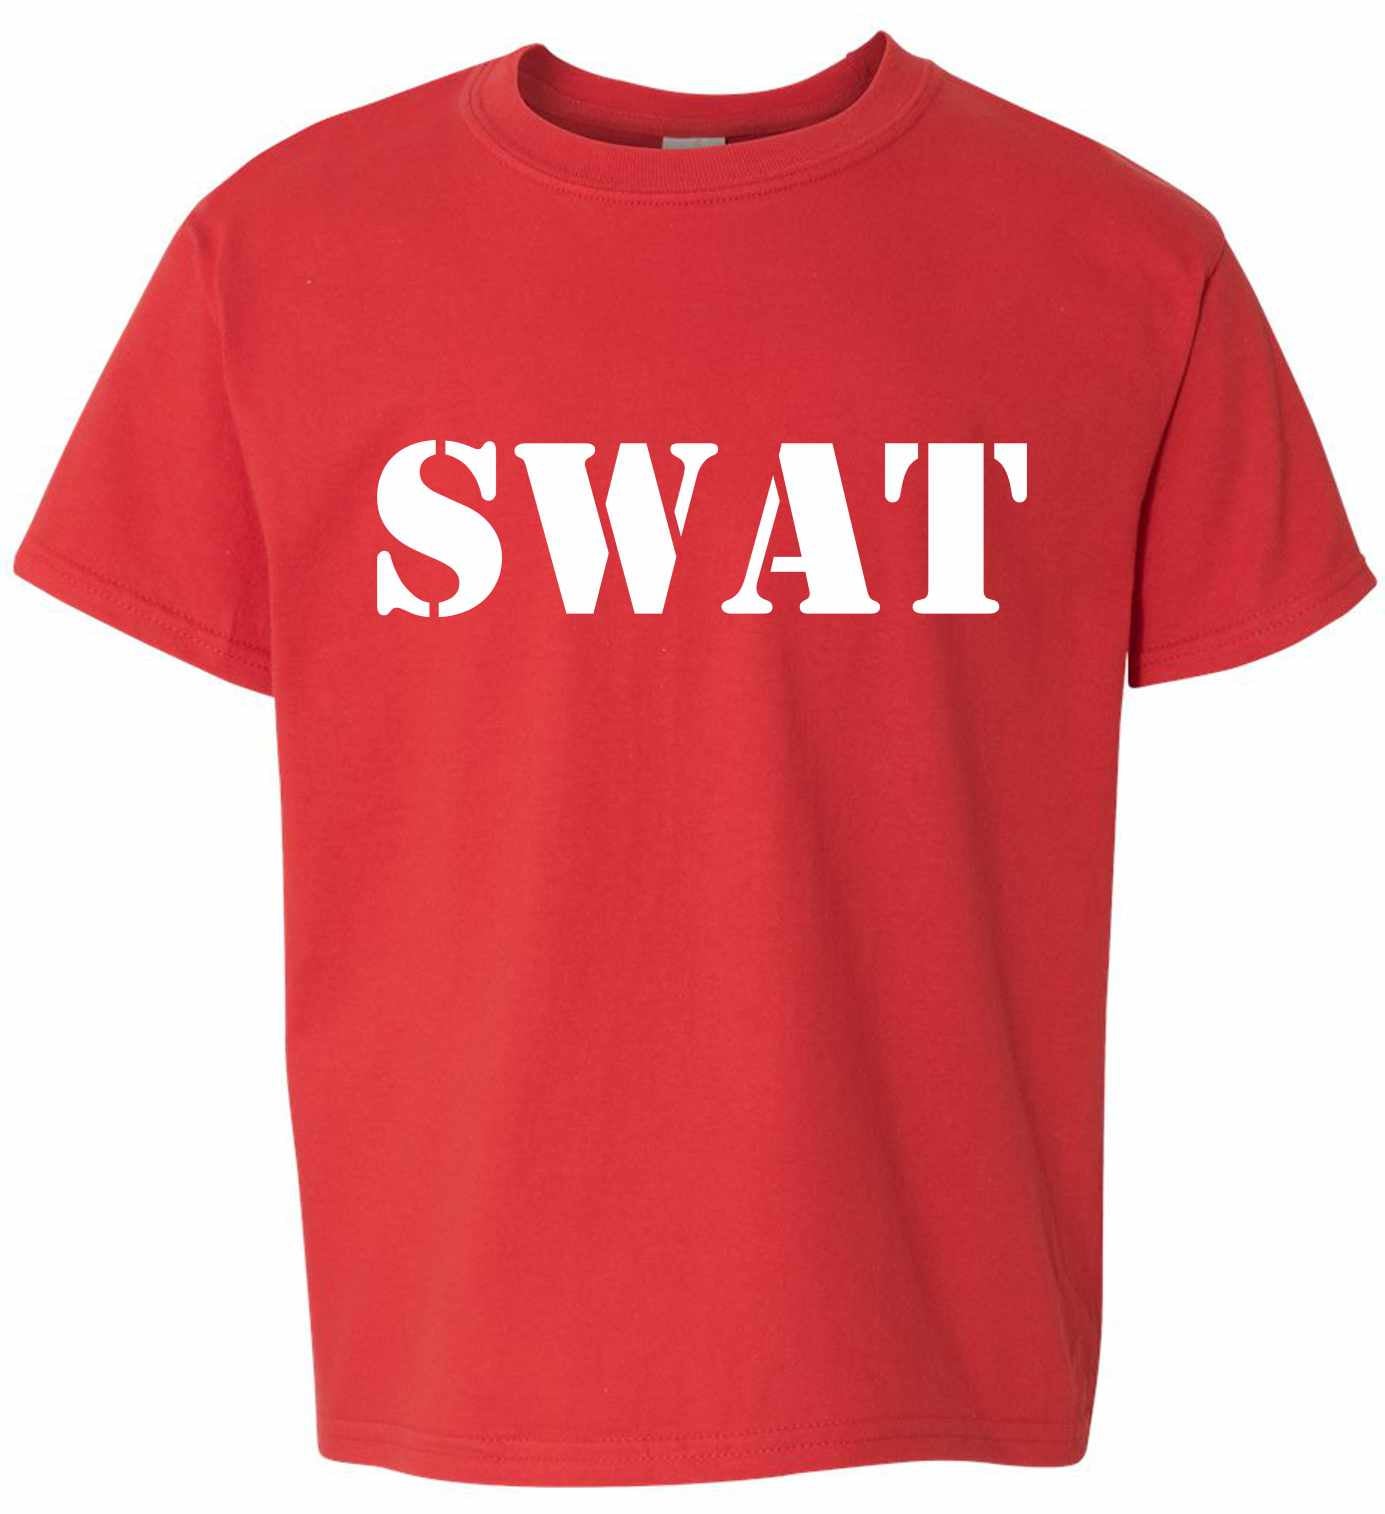 SWAT on Kids T-Shirt (#247-201)